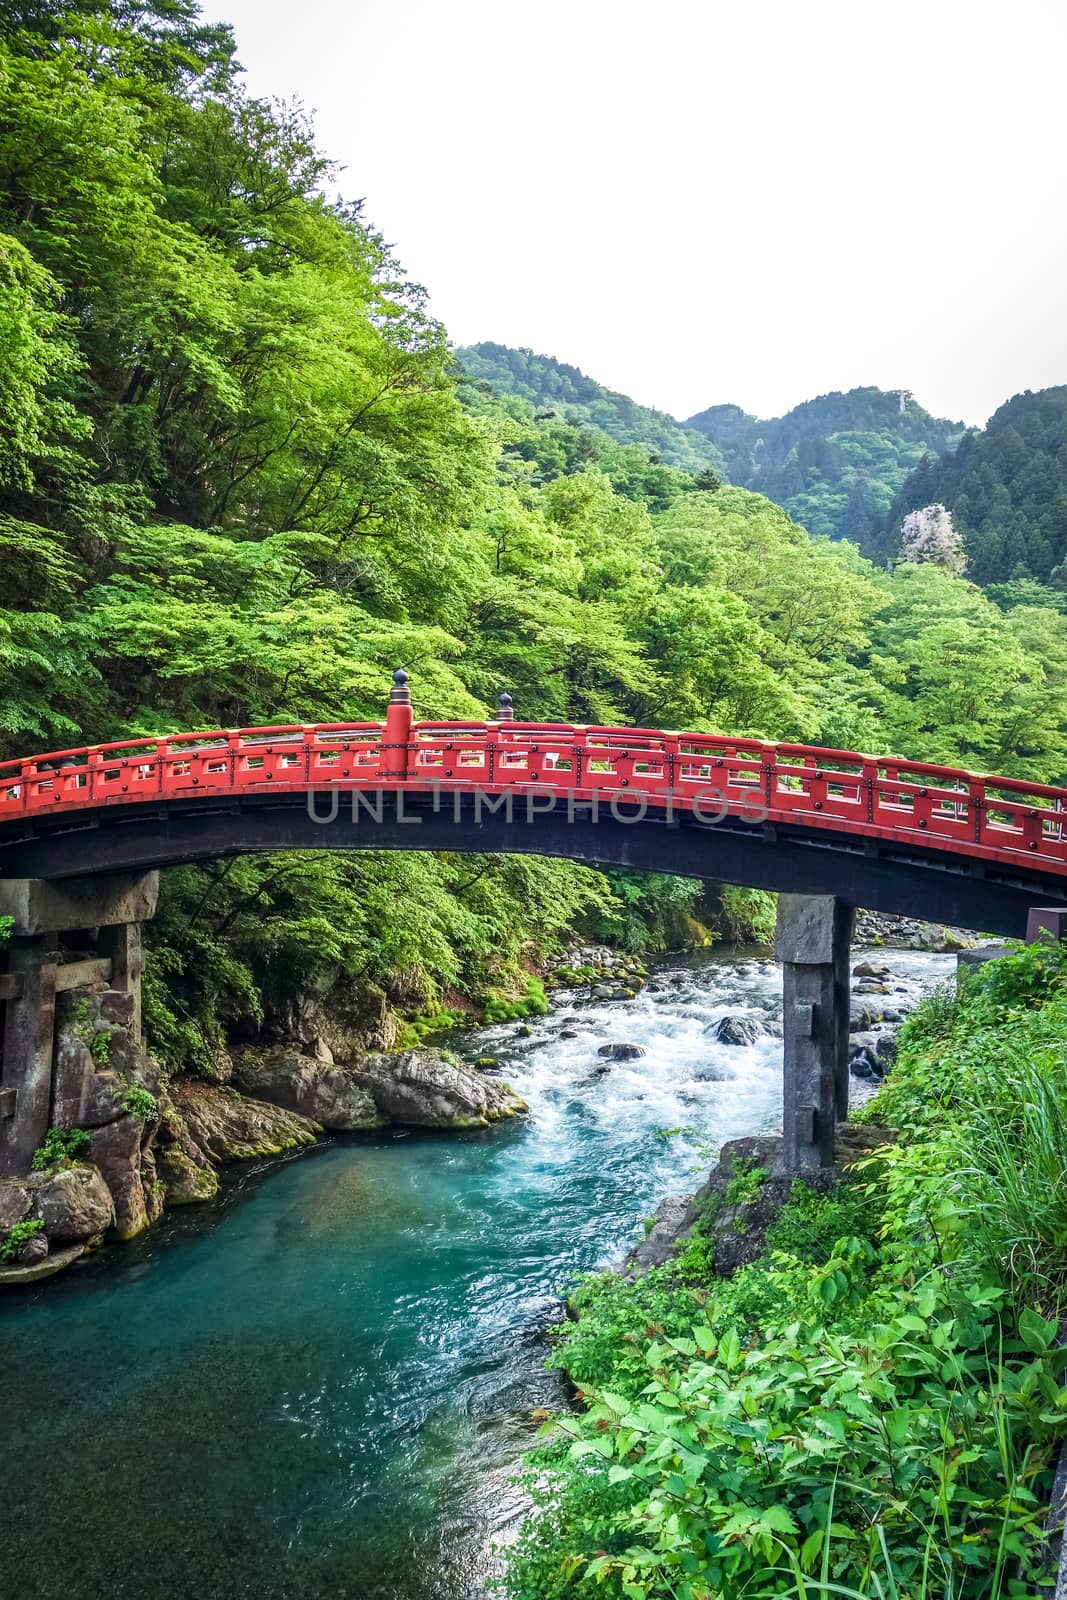 Futarasan jinja. Red wooden Shinkyo bridge, Nikko, Japan